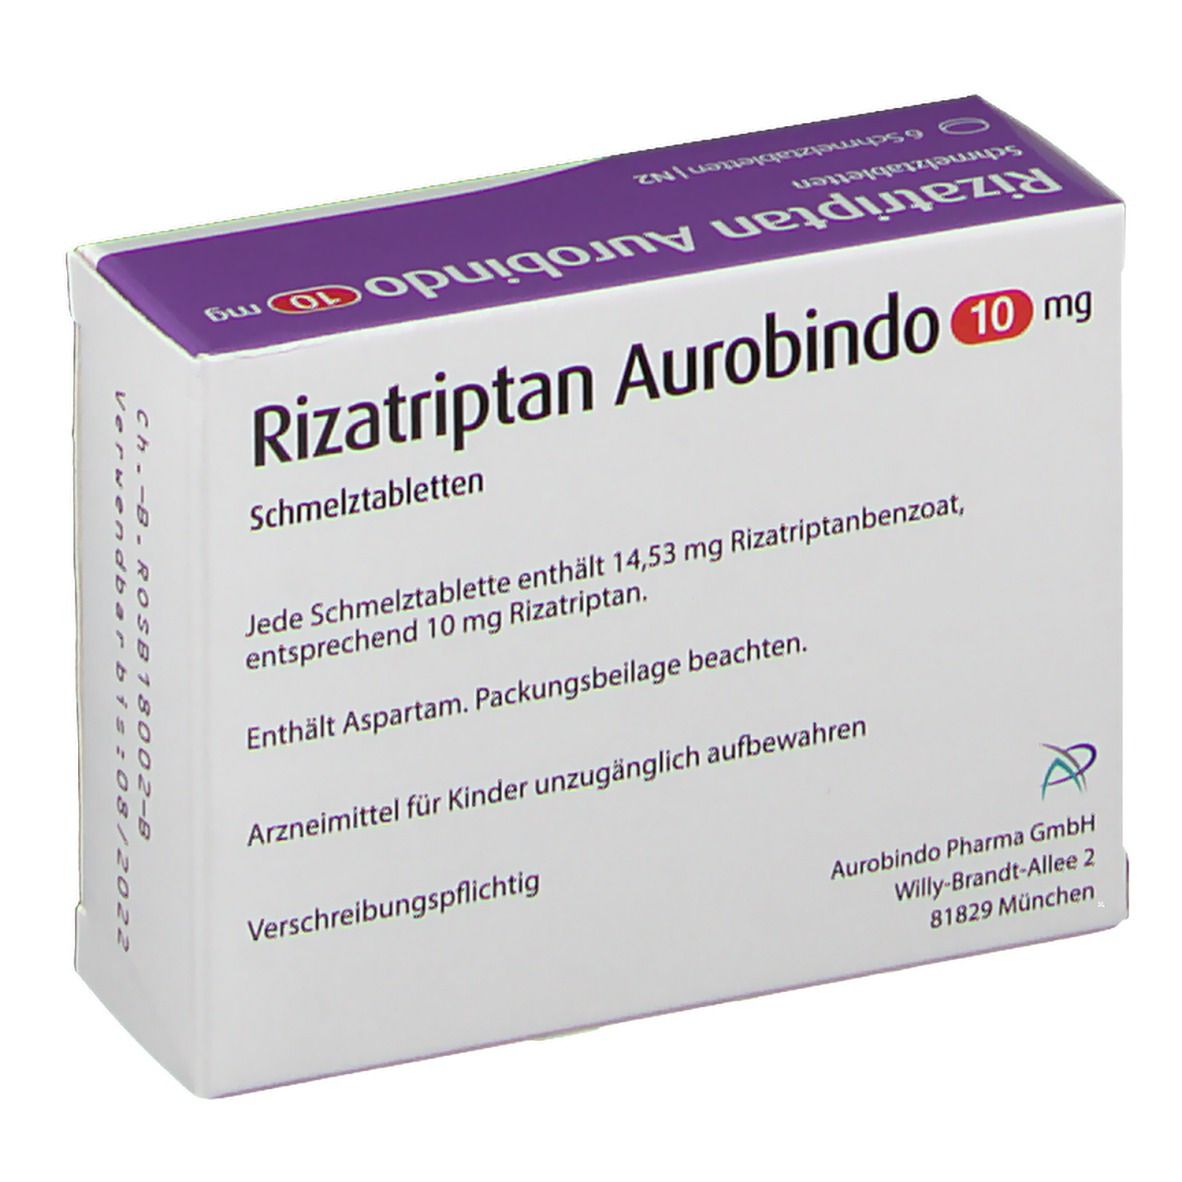 Rizatriptan Aurobindo 10 mg